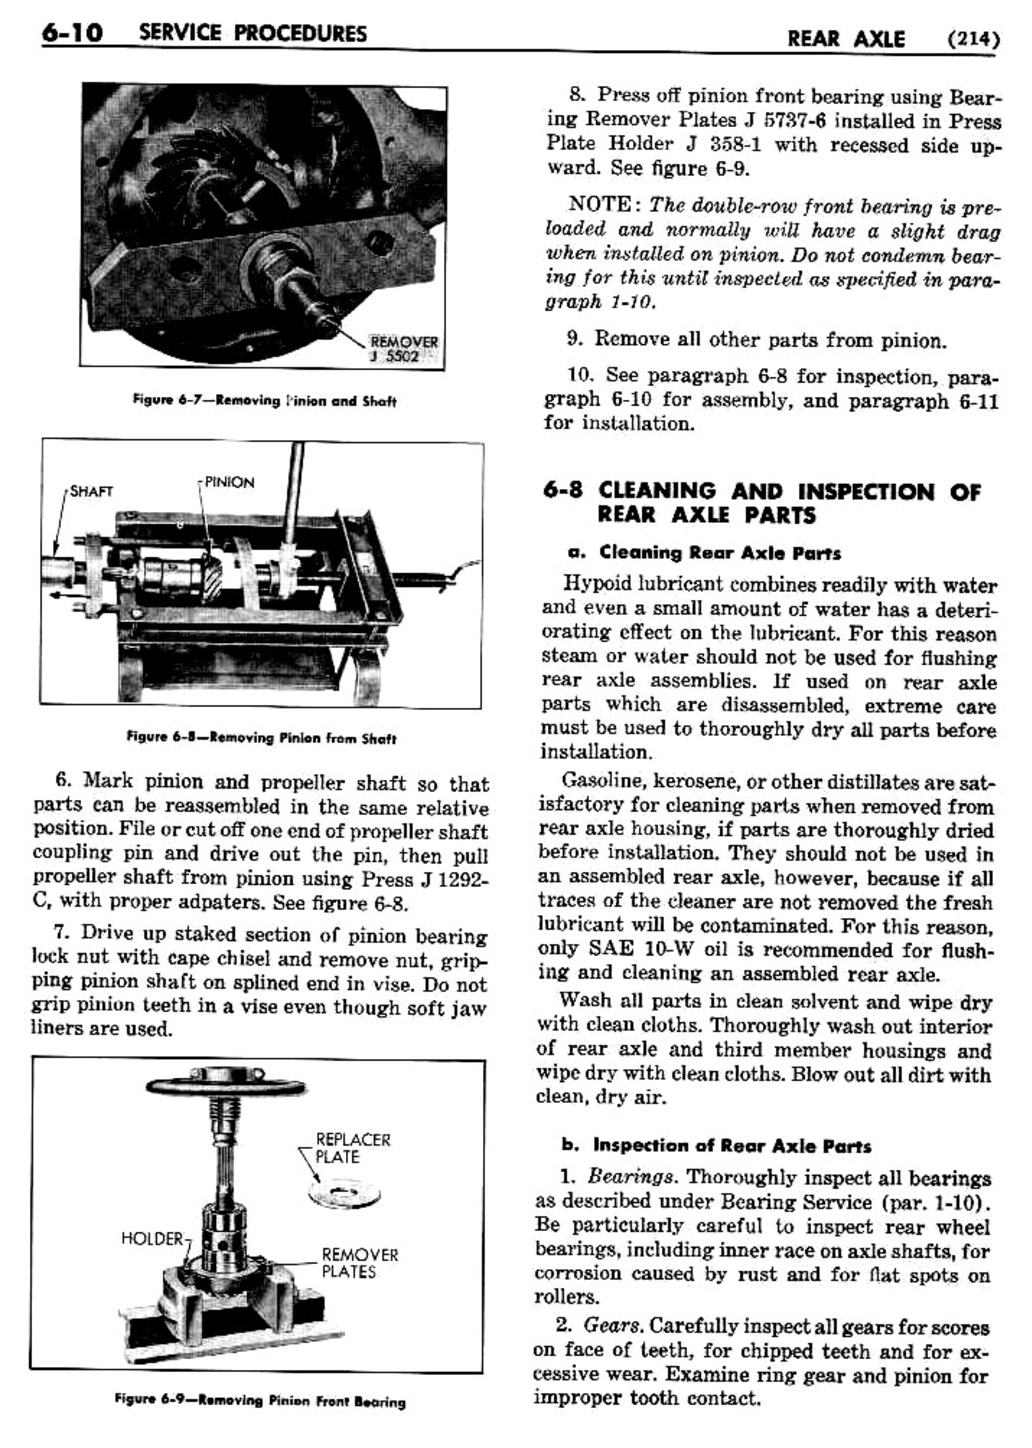 n_07 1955 Buick Shop Manual - Rear Axle-010-010.jpg